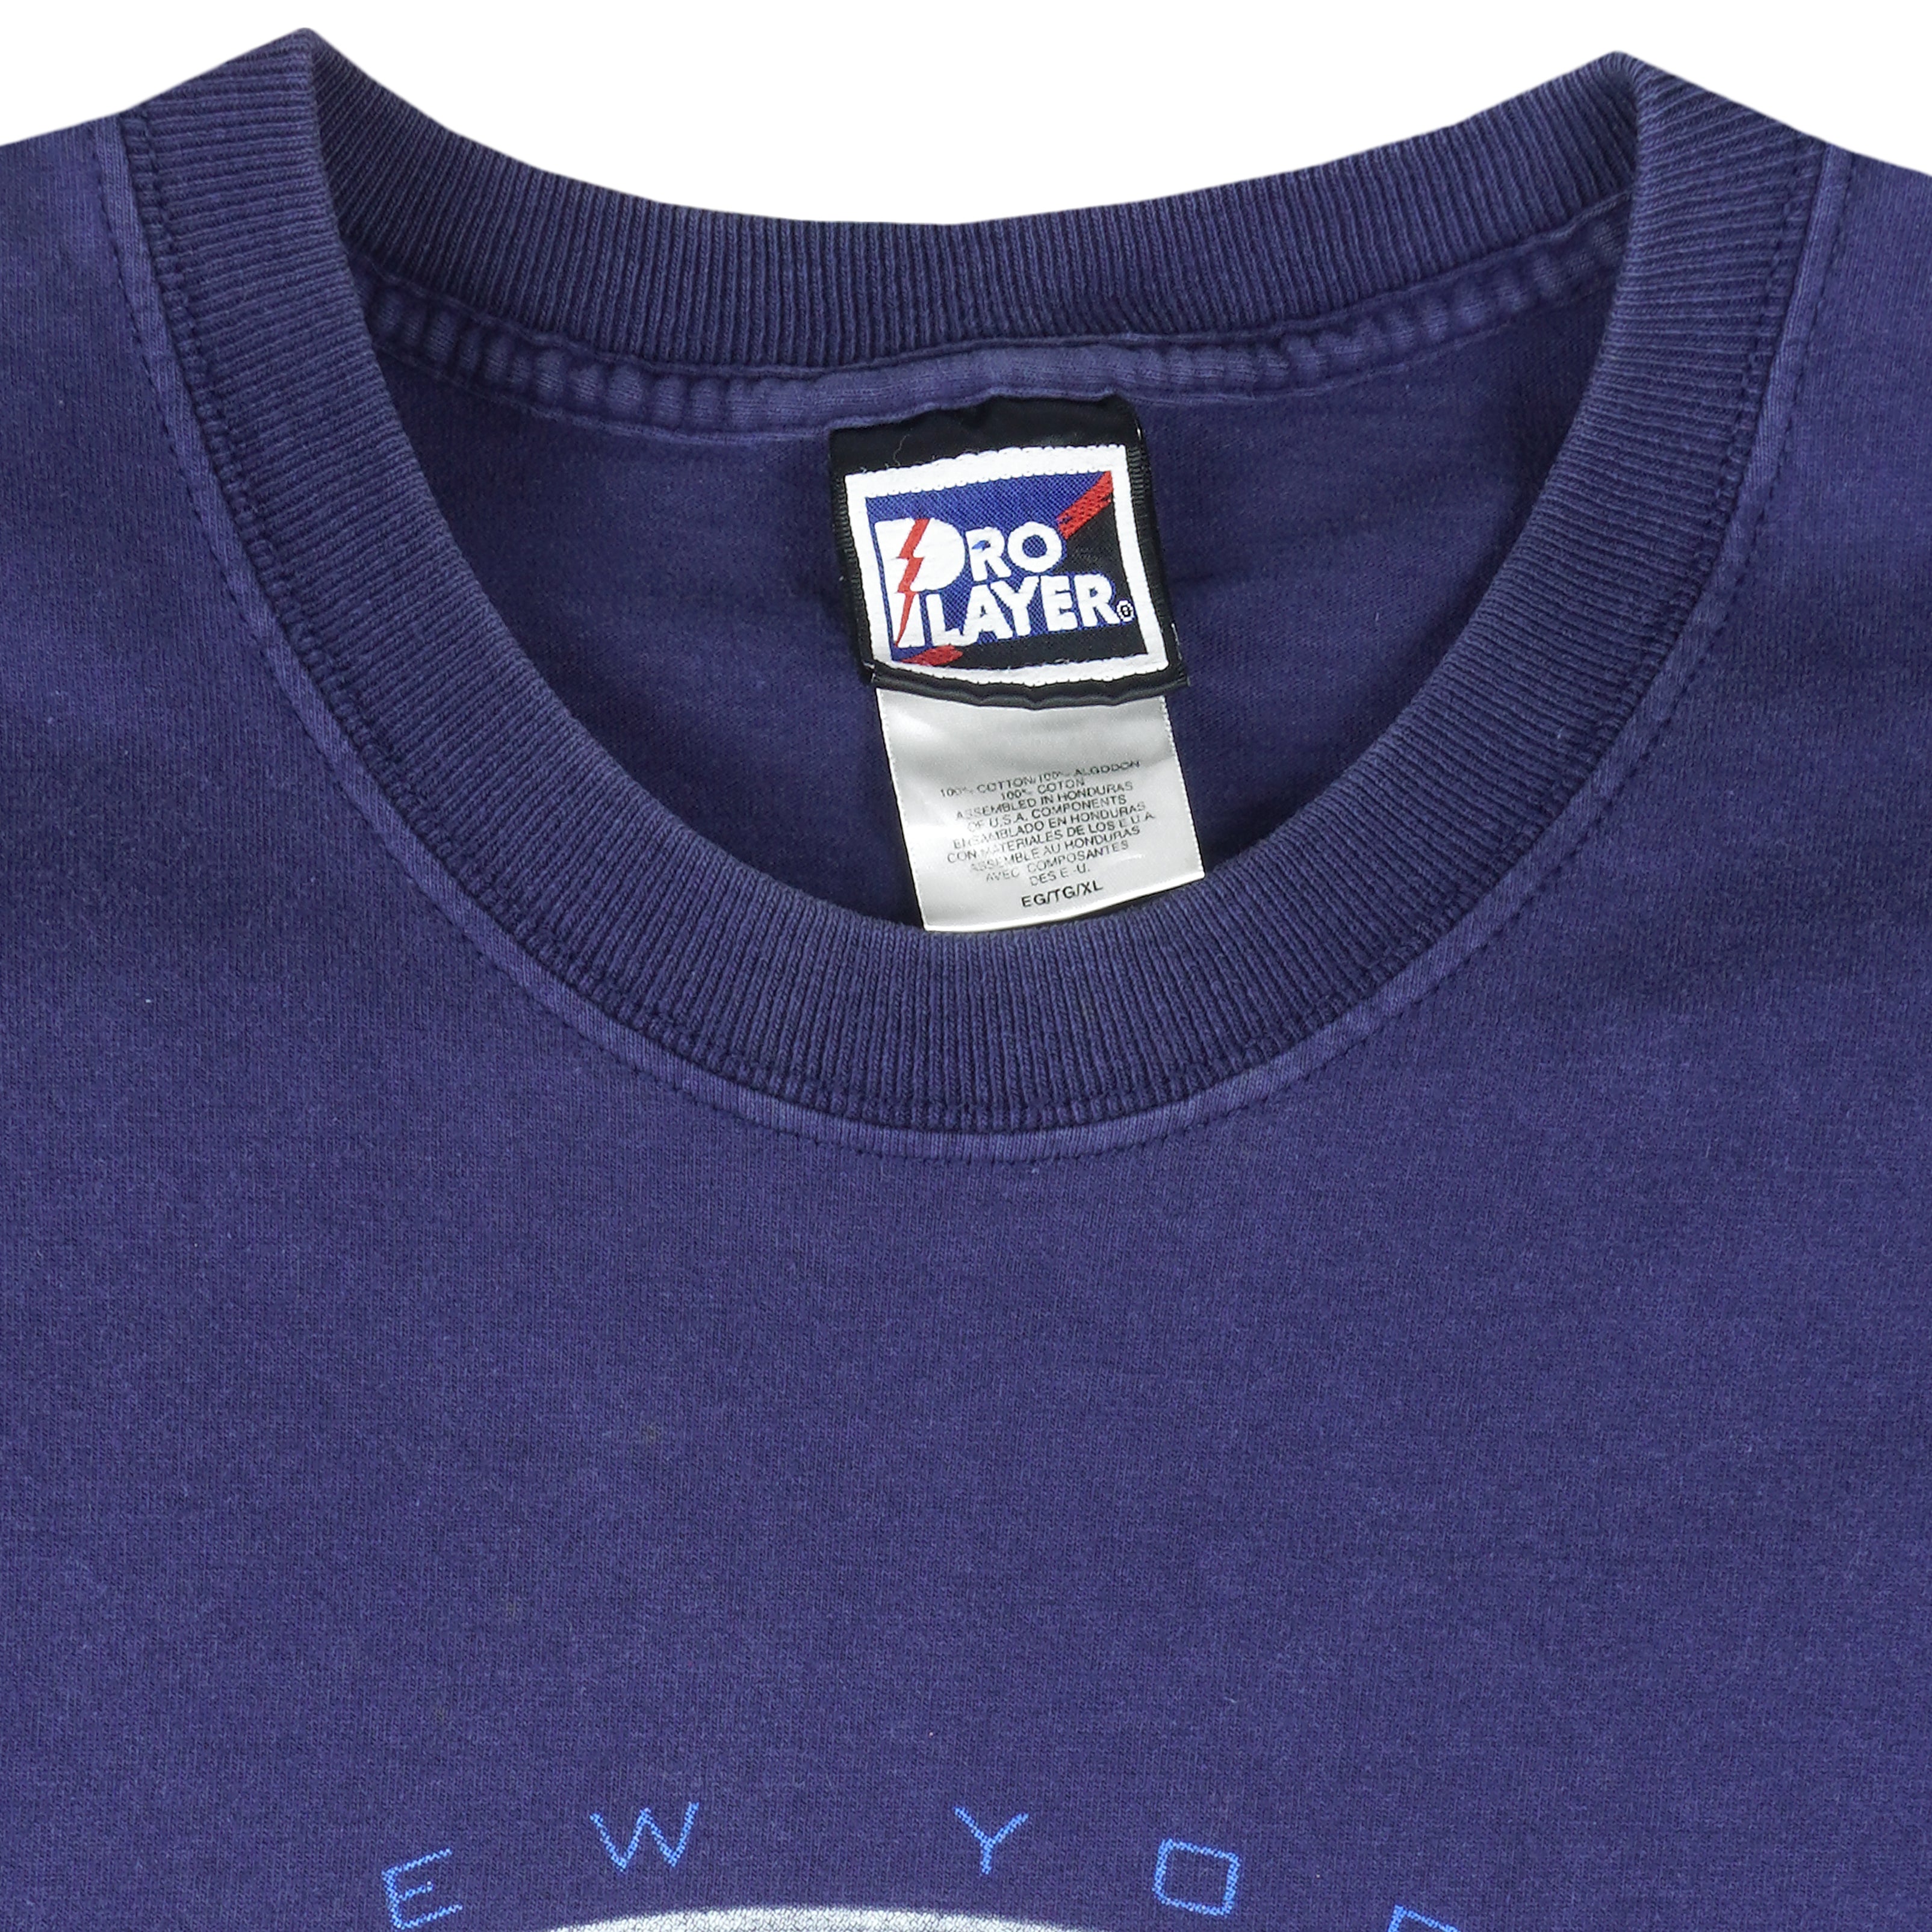 Assembly Cotton New York Logo T-Shirt - Gray